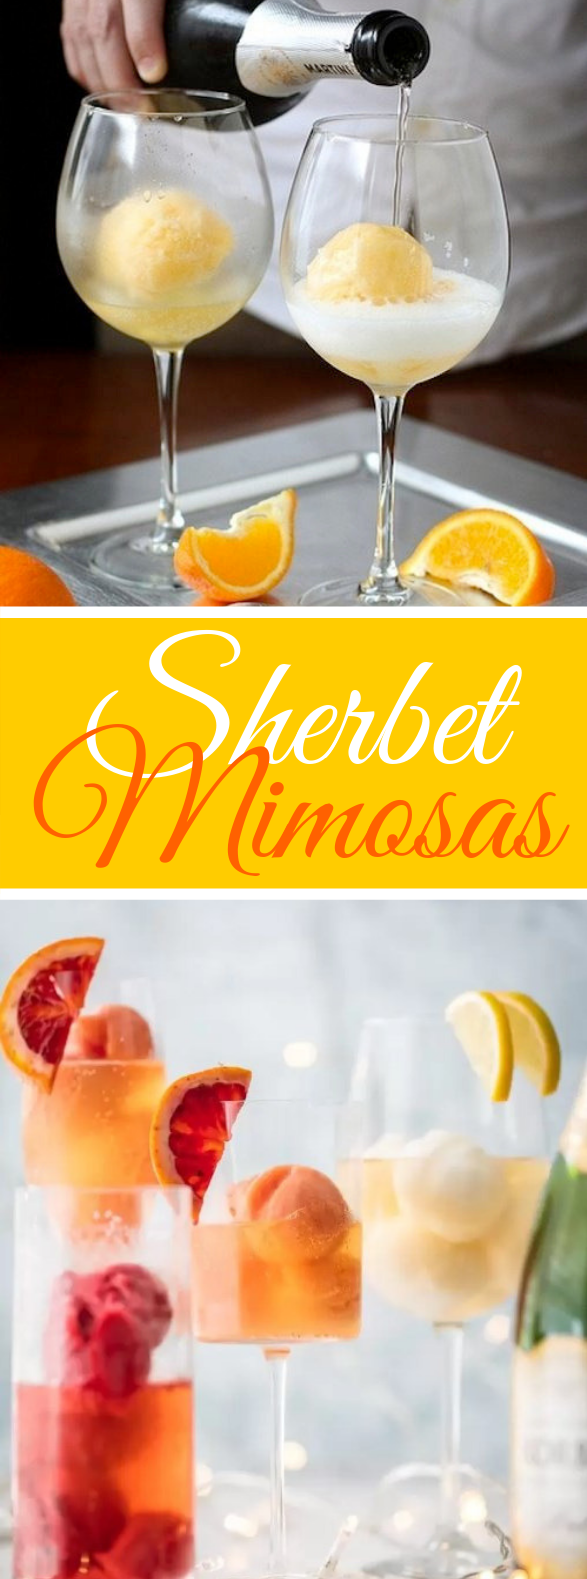 SHERBET MIMOSAS #drinks #cocktails